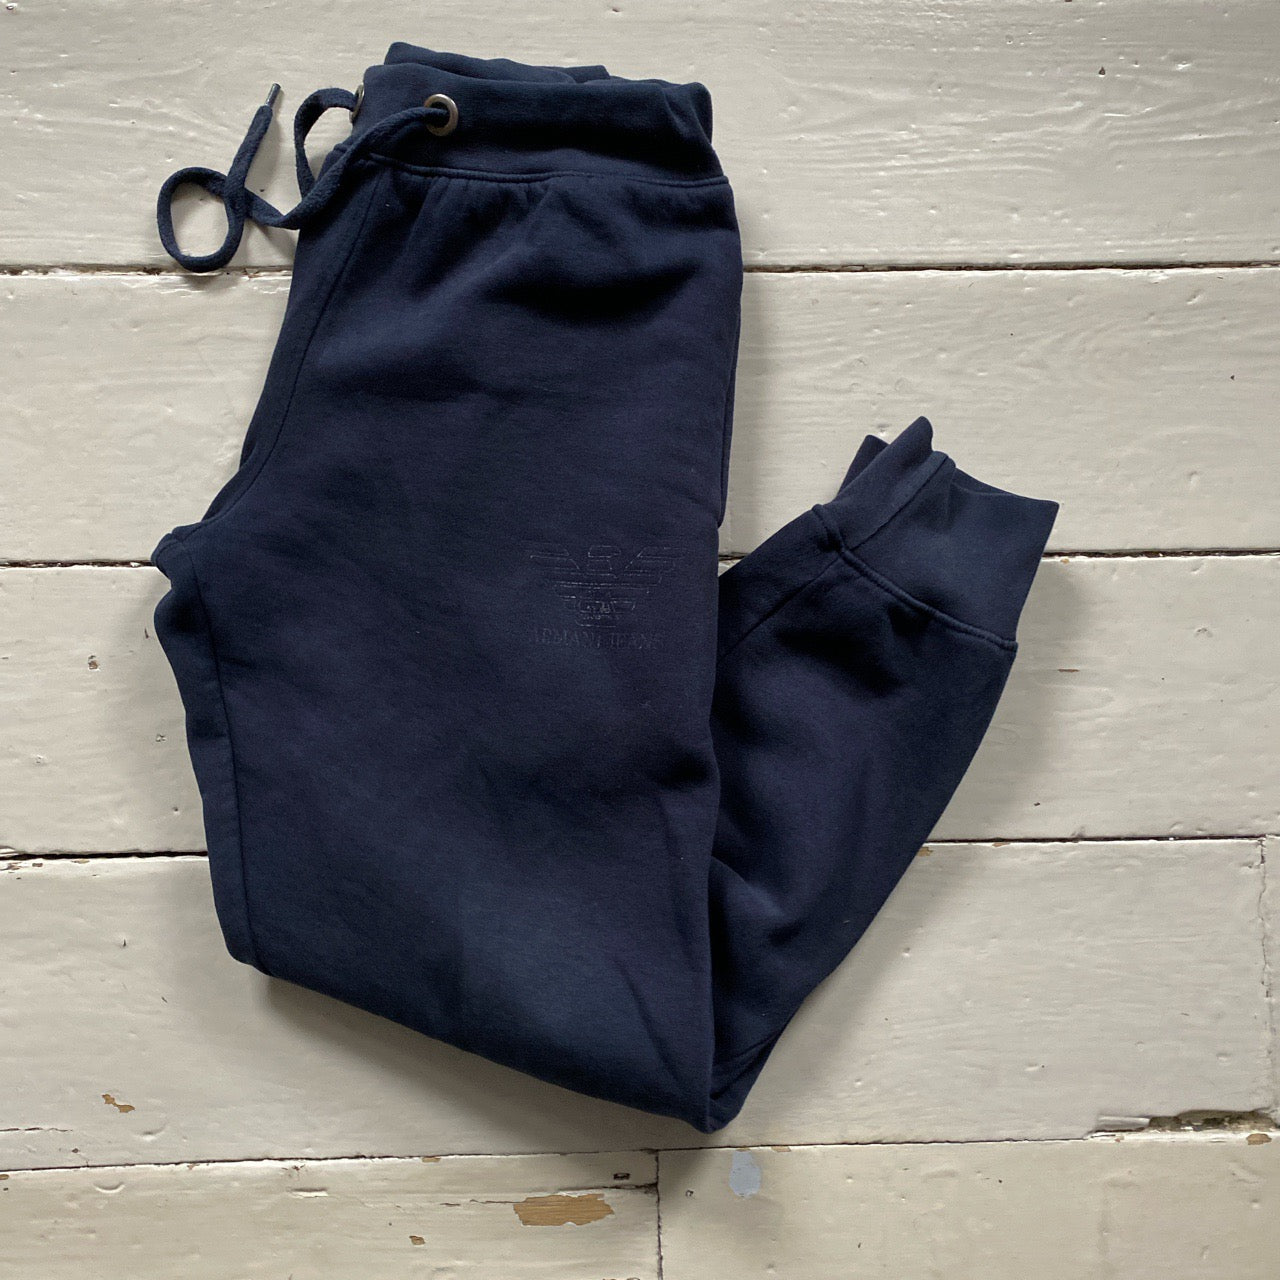 Armani Jeans Navy Blue Joggers (Small)